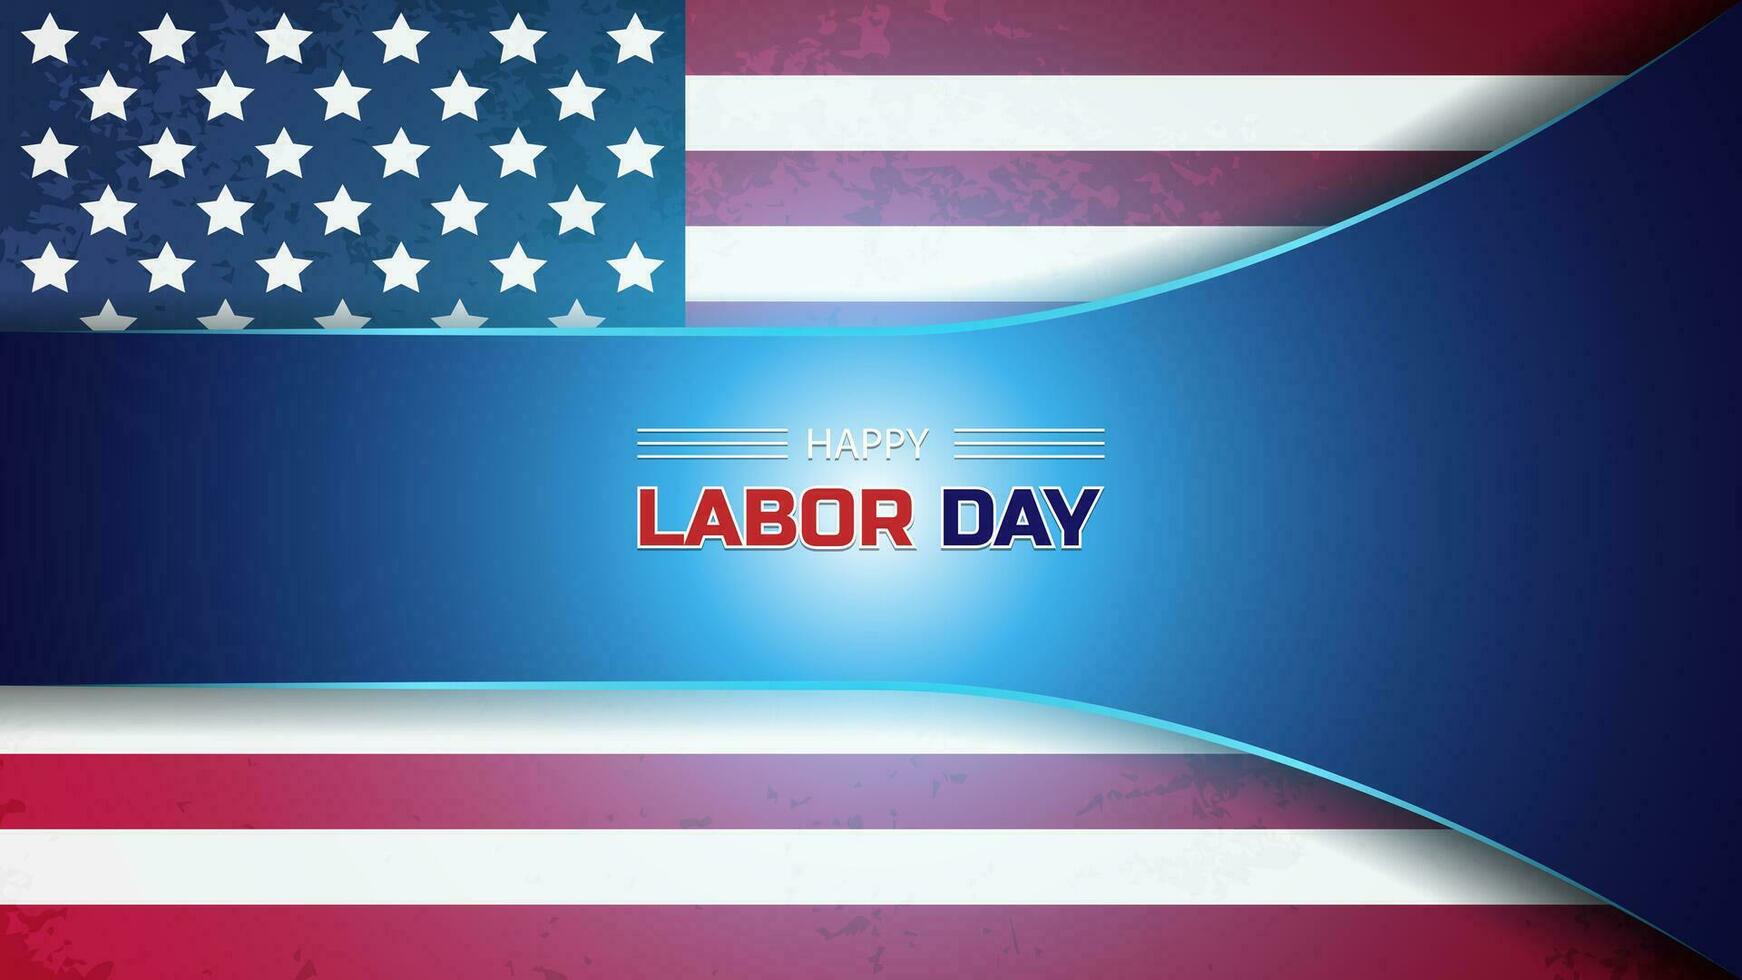 Labor day banner vector illustration, USA flag waving on blue background